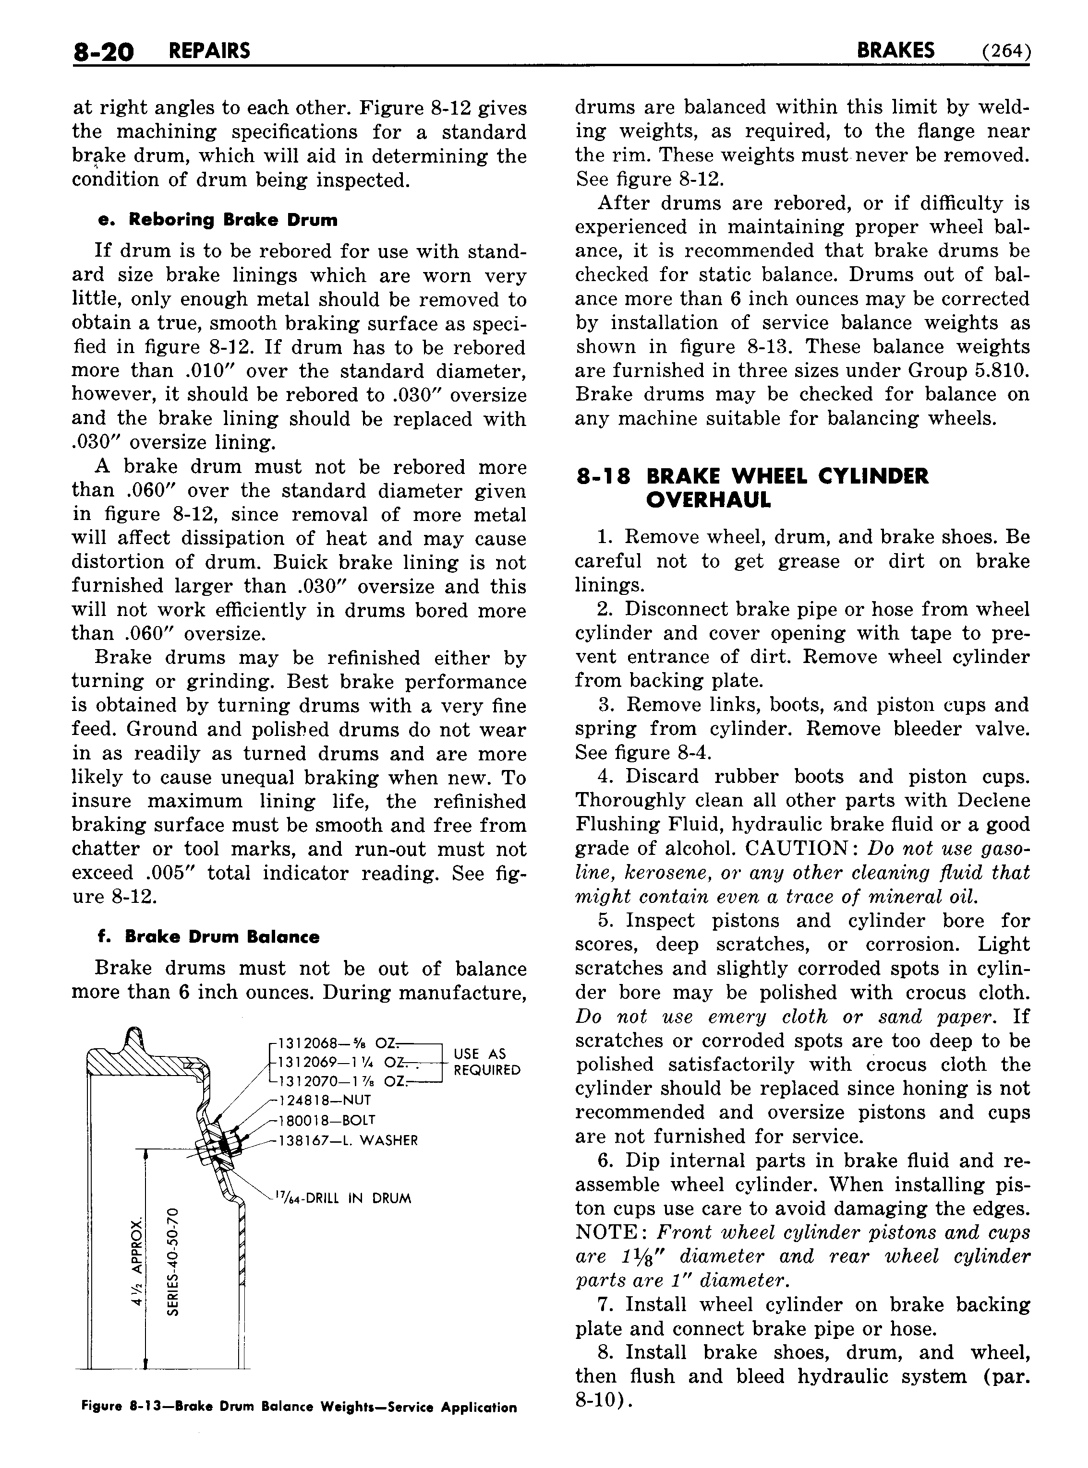 n_09 1948 Buick Shop Manual - Brakes-020-020.jpg